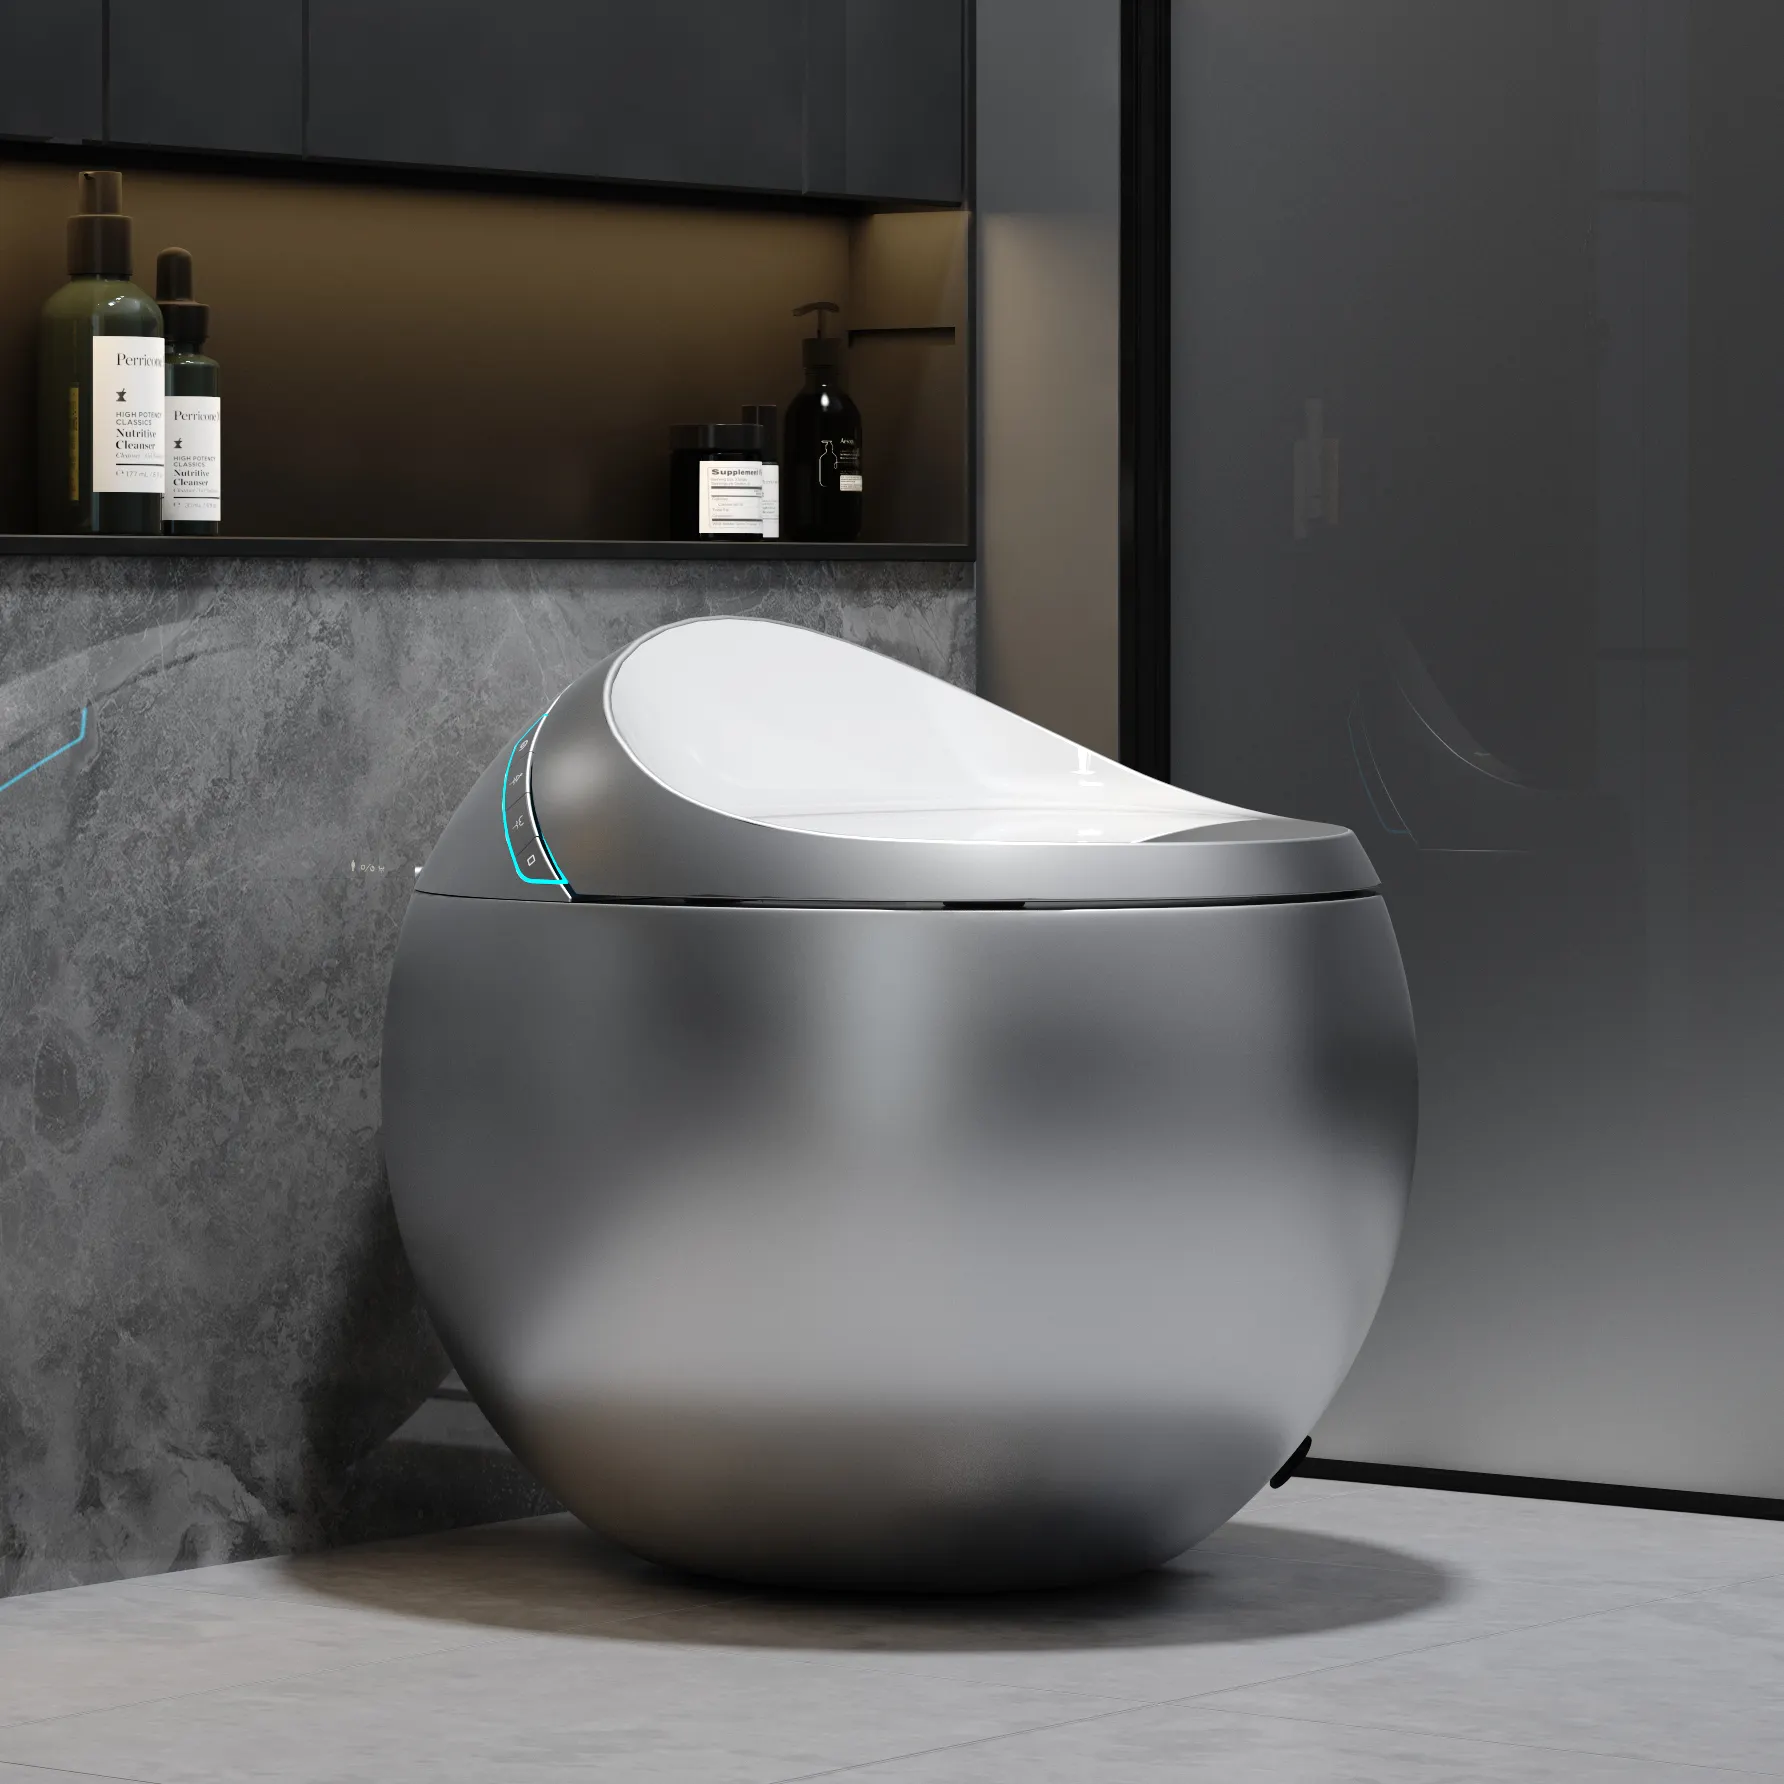 Desain baru kamar mandi peralatan kamar mandi cerdas One Piece Wc Toilet mangkuk bentuk telur bulat otomatis Smart Toilet